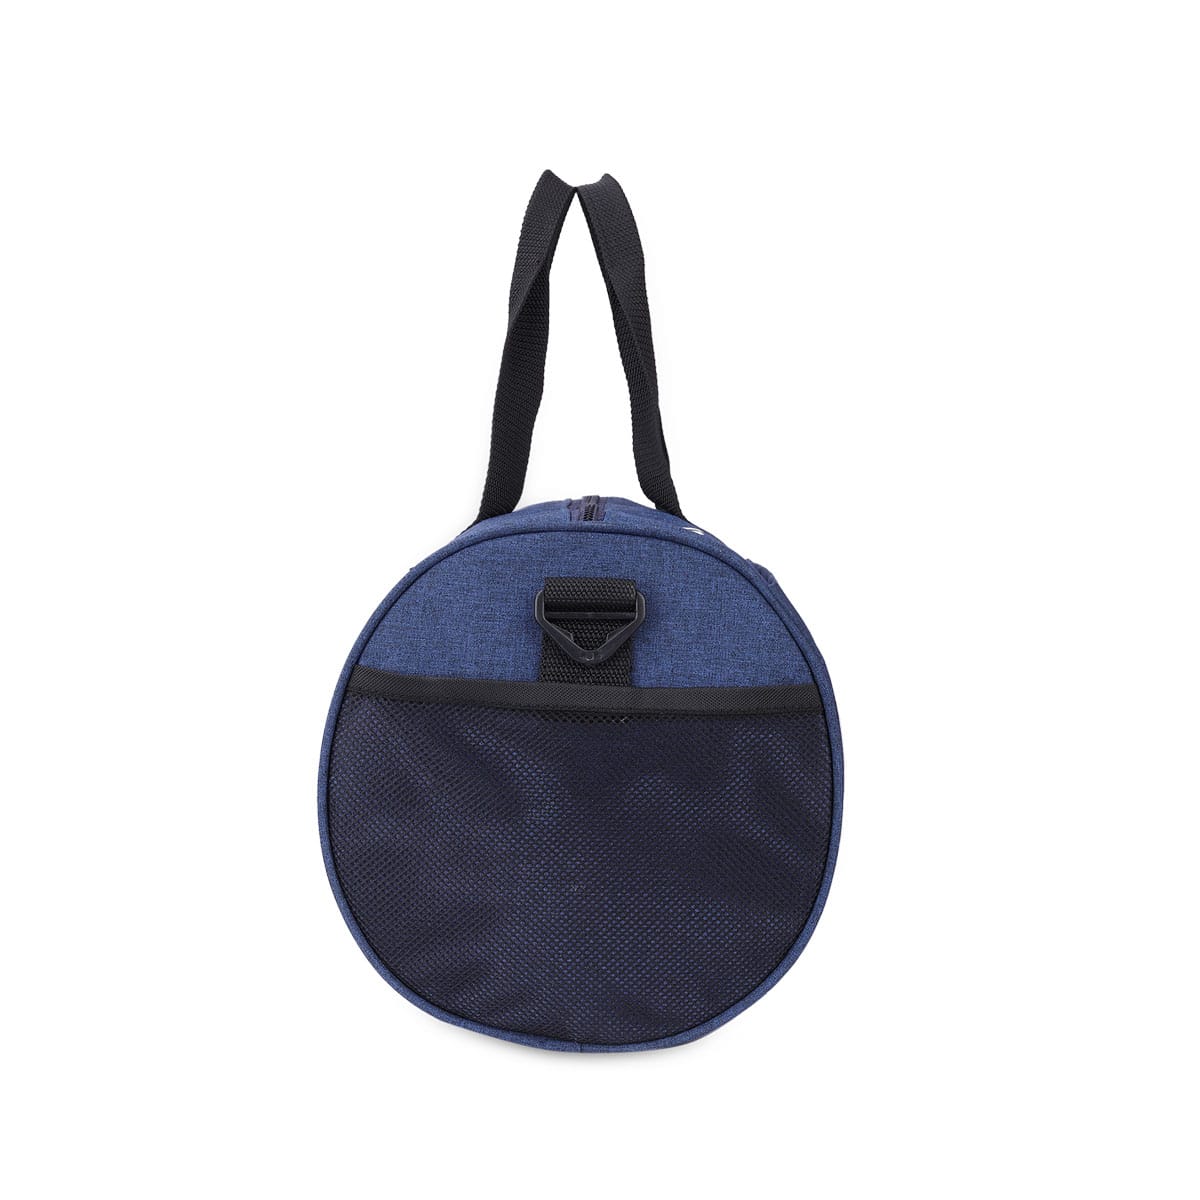 Travel Bags,आपकी यात्रा के साथी- सस्ते सुन्दर बैग! - buy-the-best-travel- bags-online-low-price - Navbharat Times